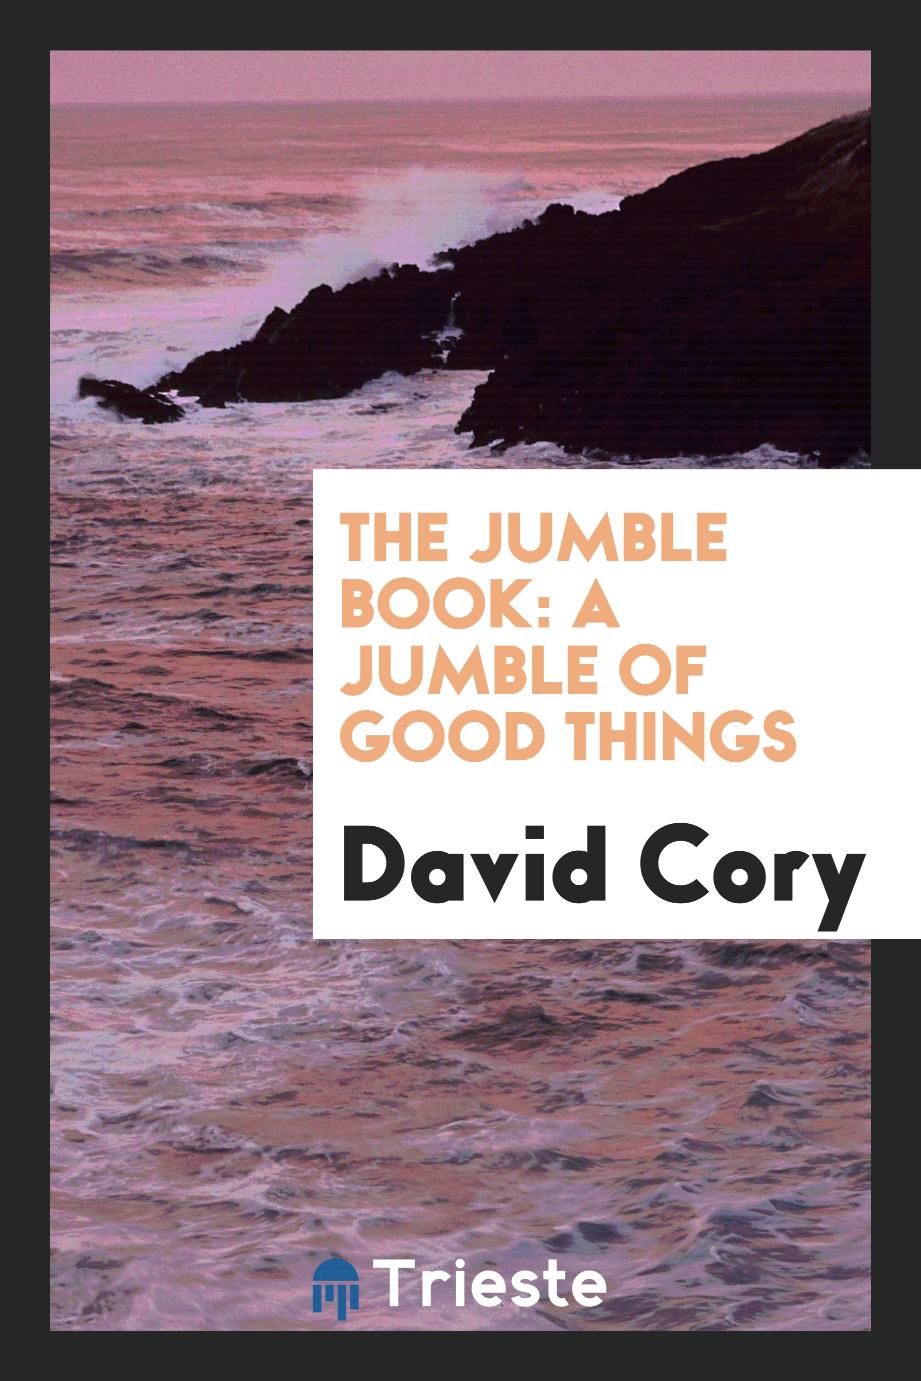 The jumble book: a jumble of good things